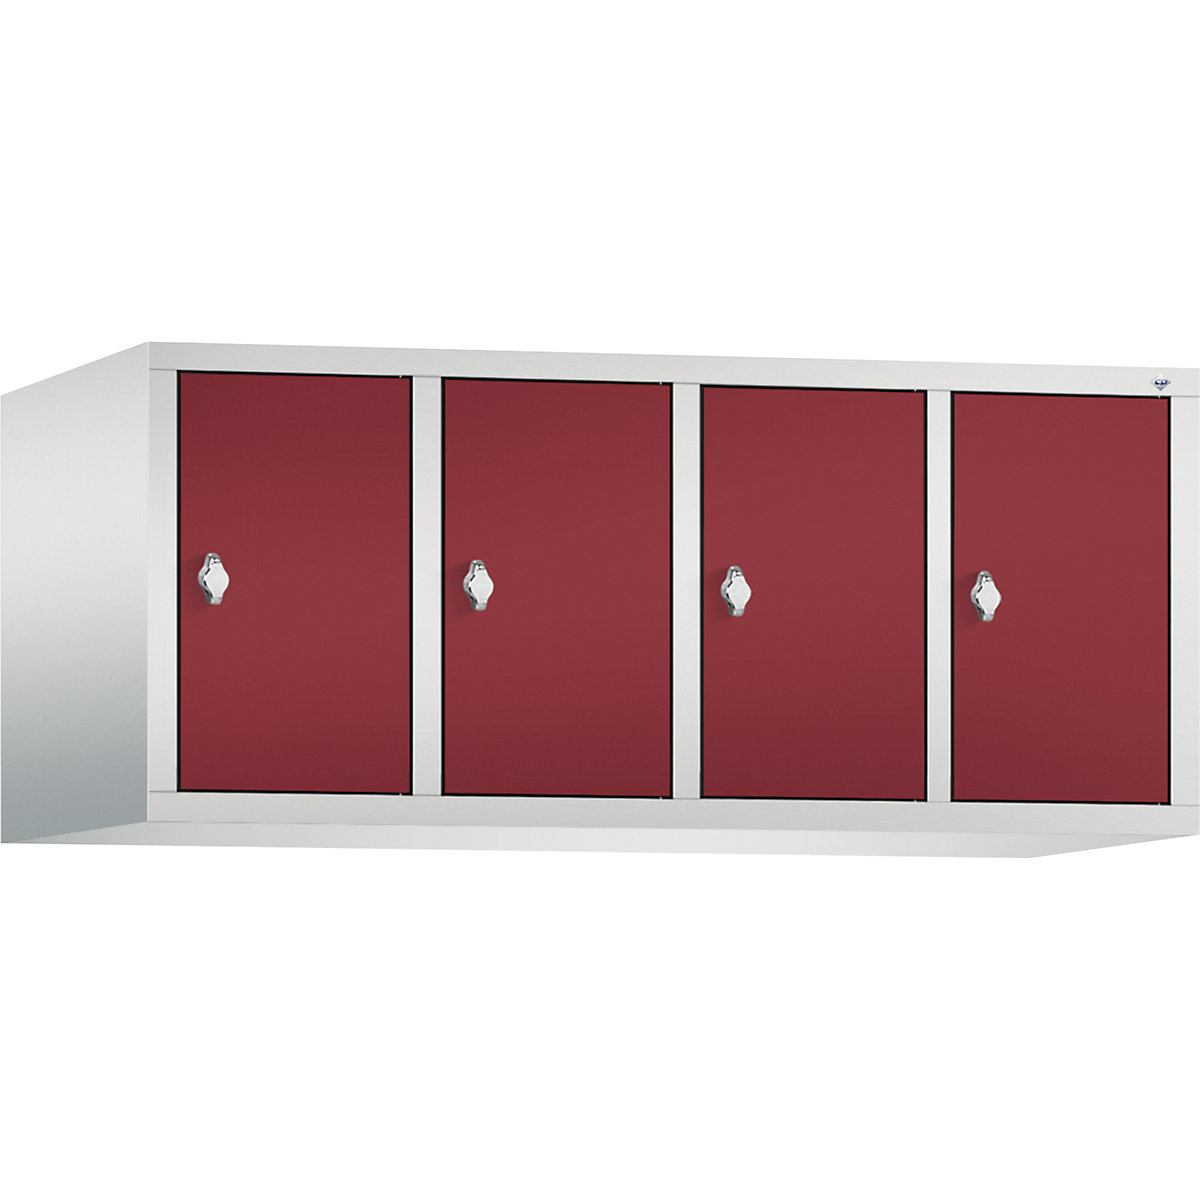 C+P – Altillo CLASSIC, 4 compartimentos, anchura de compartimento 300 mm, gris luminoso / rojo rubí